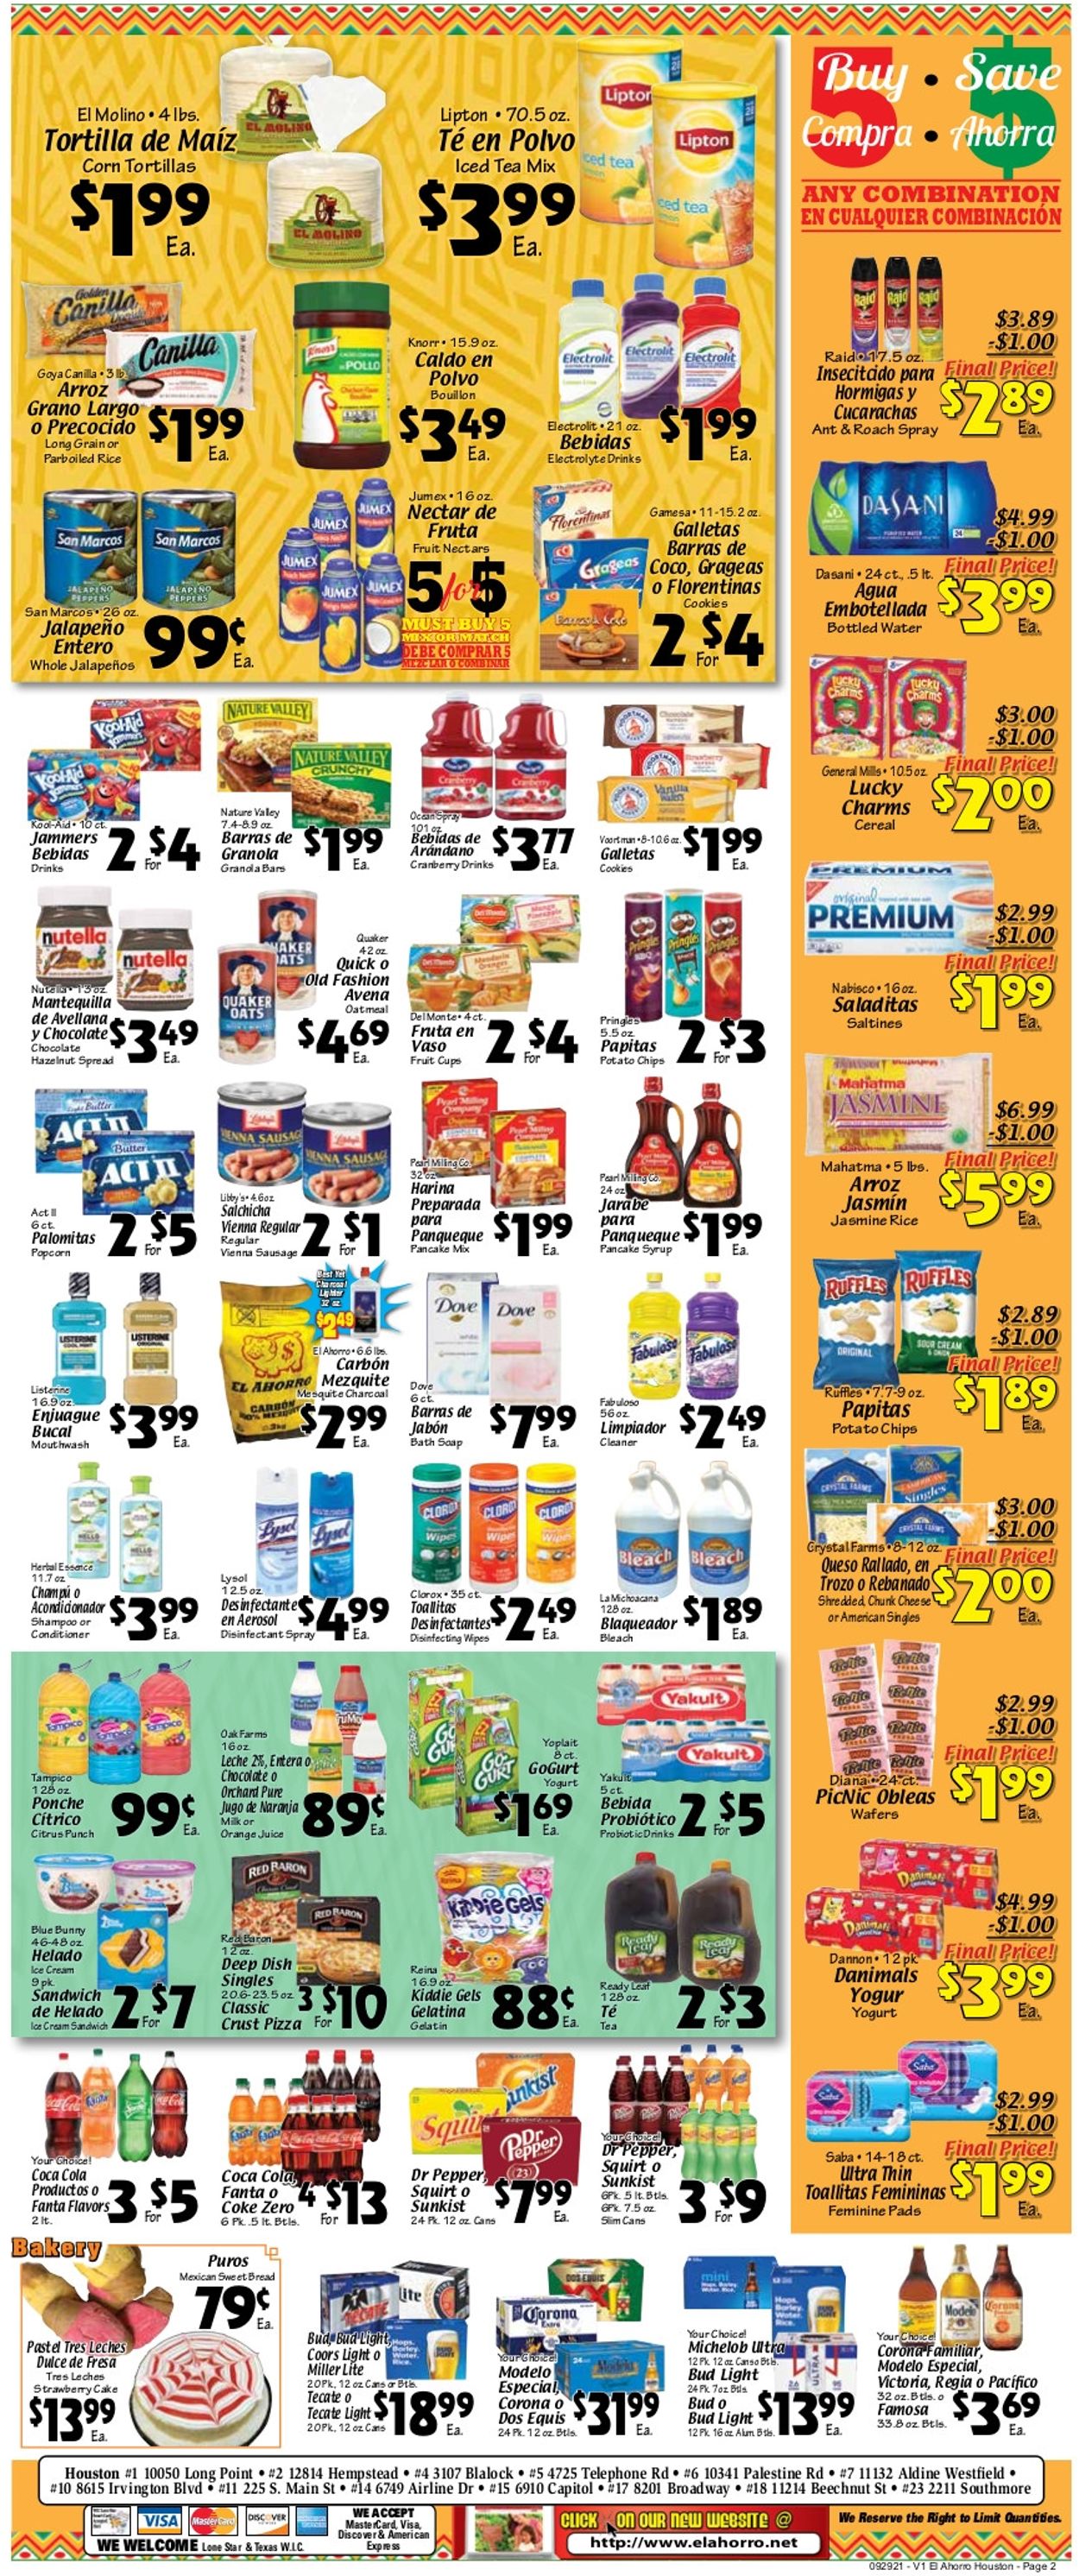 Catalogue El Ahorro Supermarket from 09/29/2021